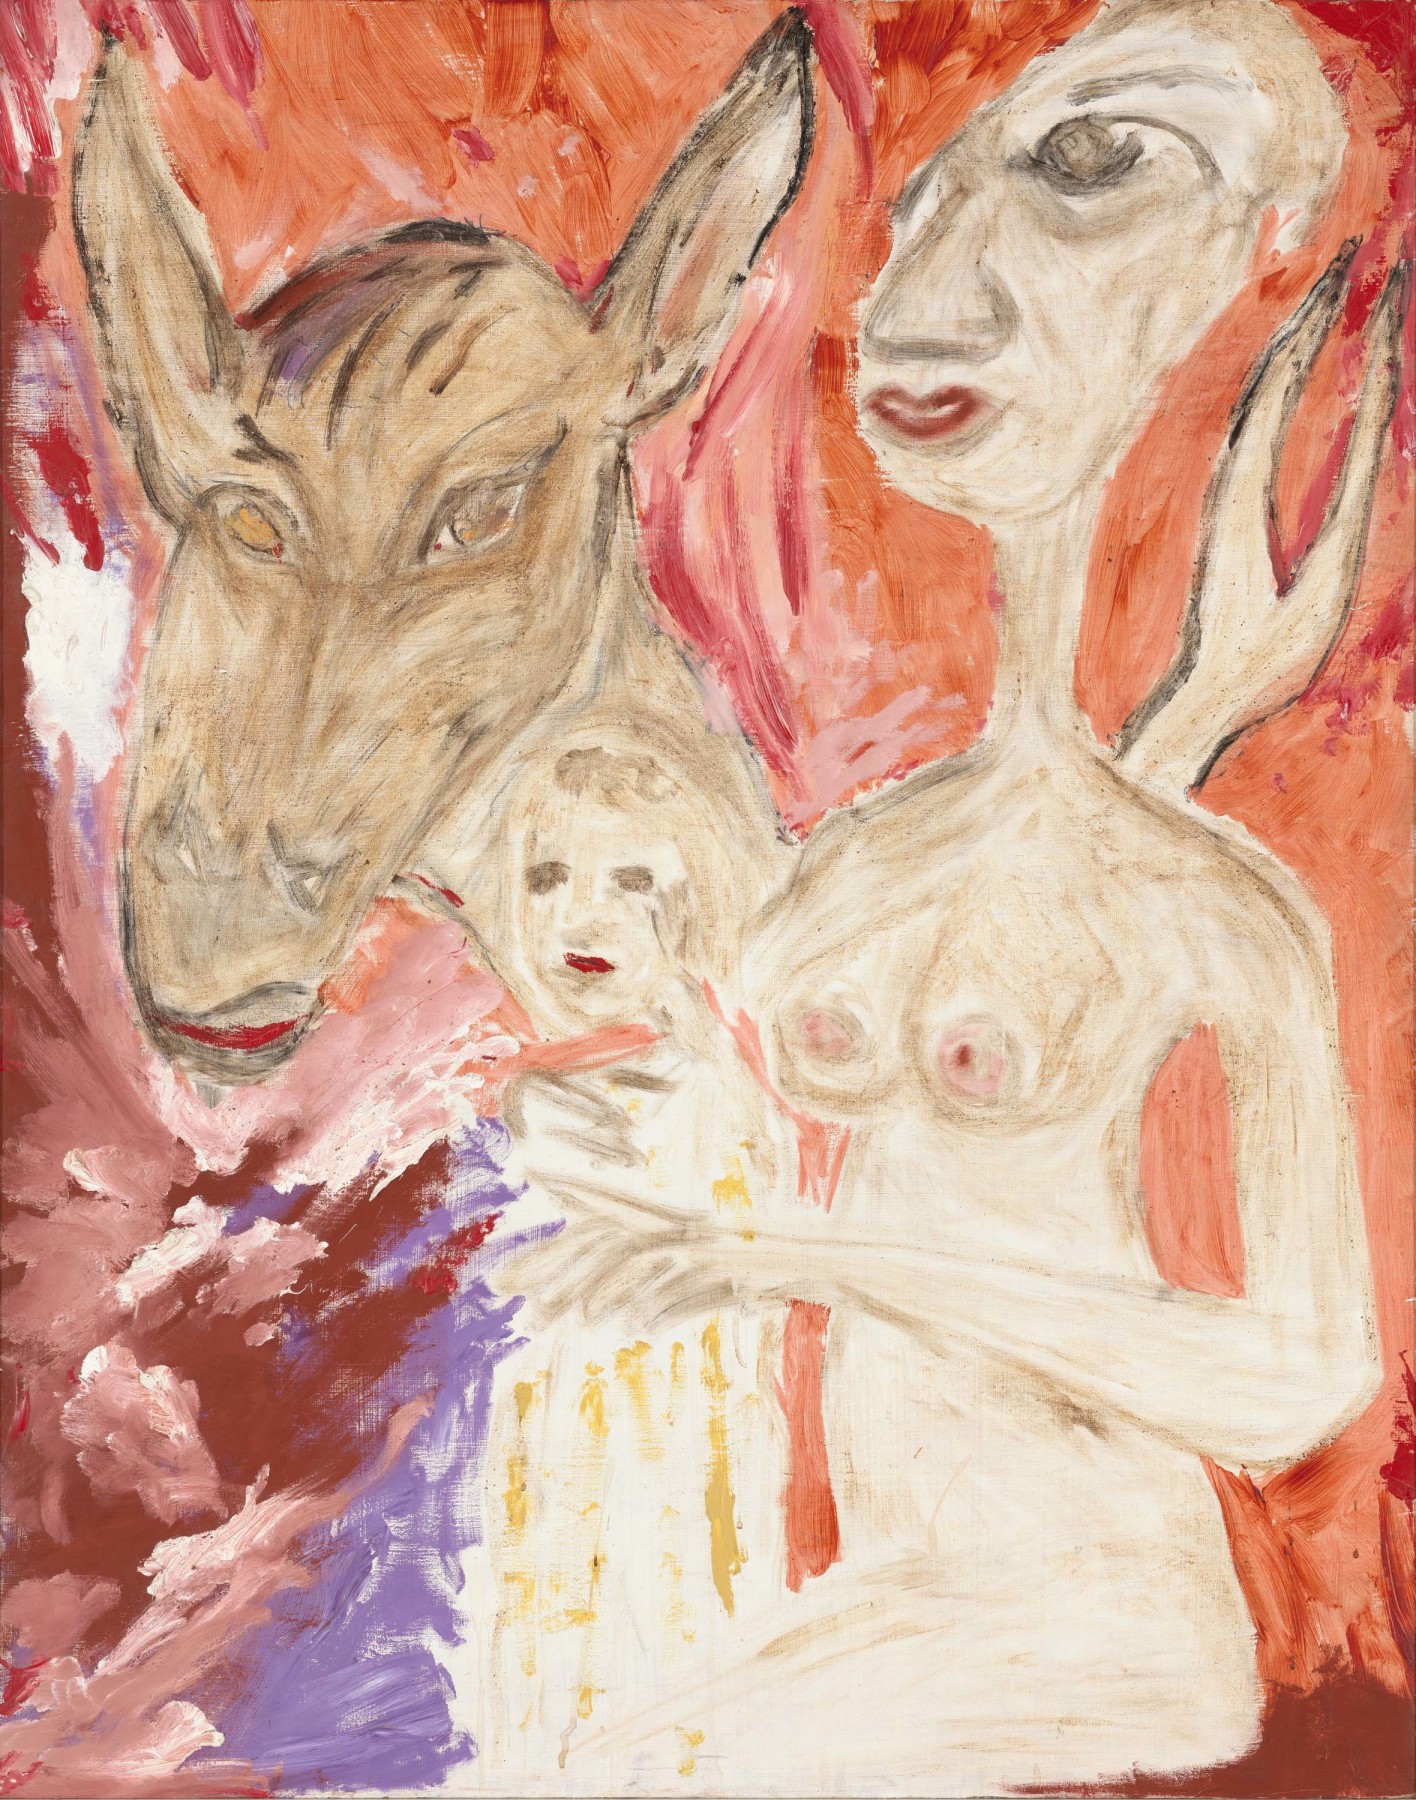 Don Van Vliet

&amp;ldquo;Aunt Cigar&amp;rsquo;s Baby&amp;rdquo;, 1984

Oil on wood

48 x 38 inches

122 x 97 cm

VLI 11/A

$125,000